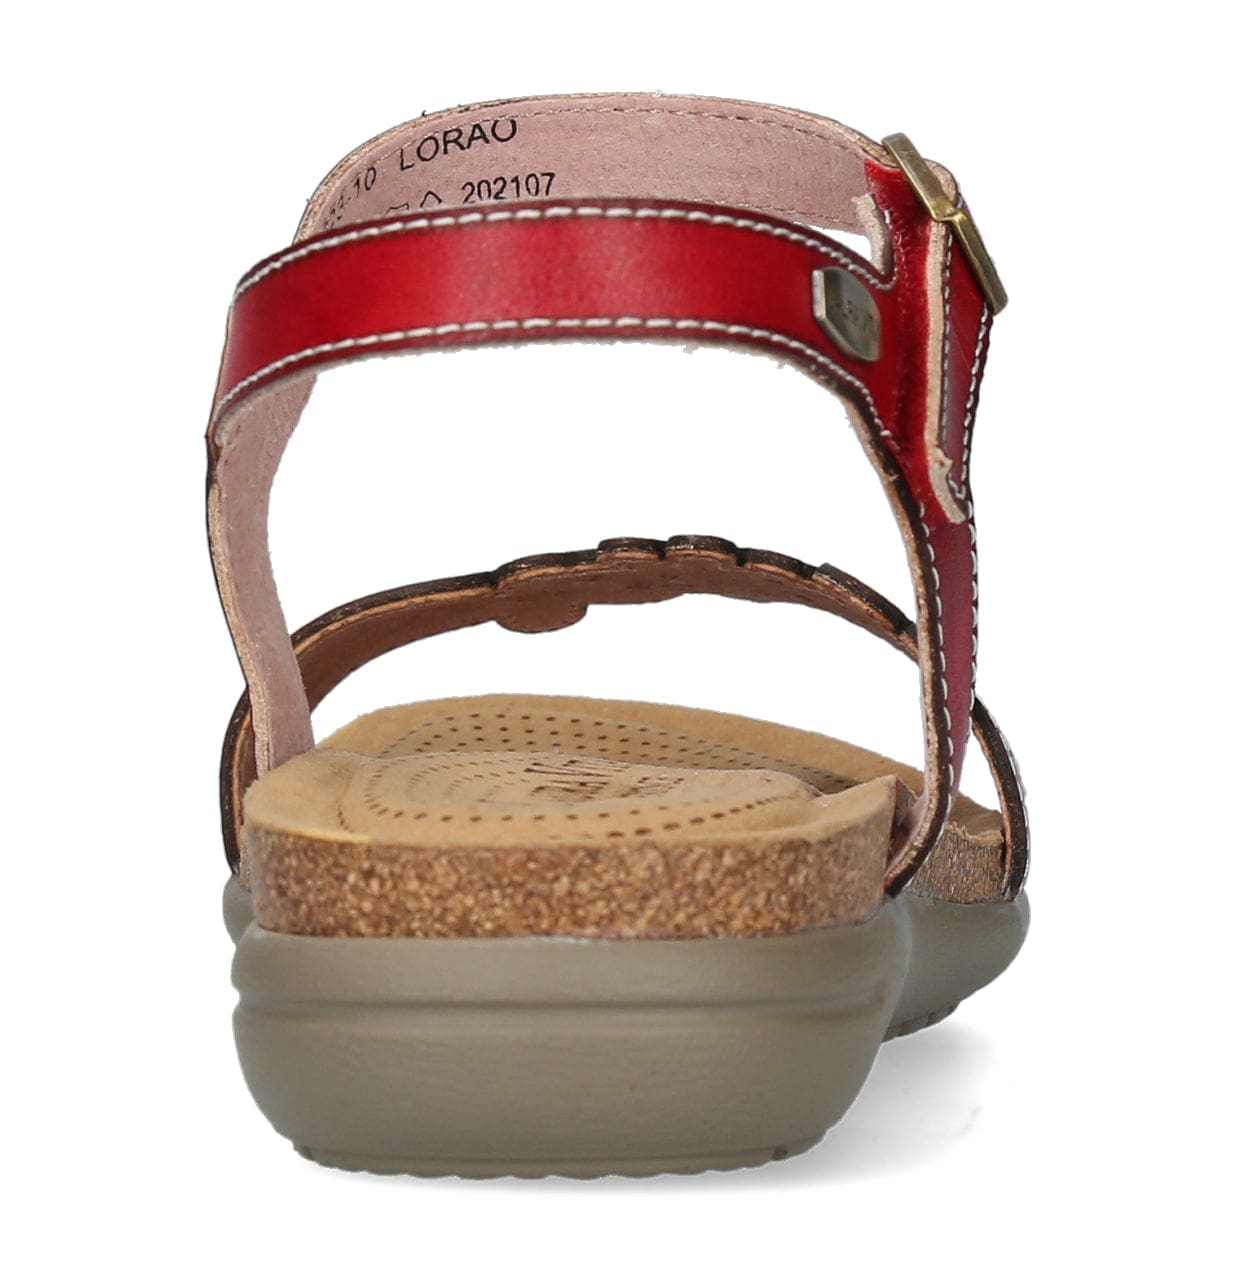 LILOO 10 Shoes - Sandal